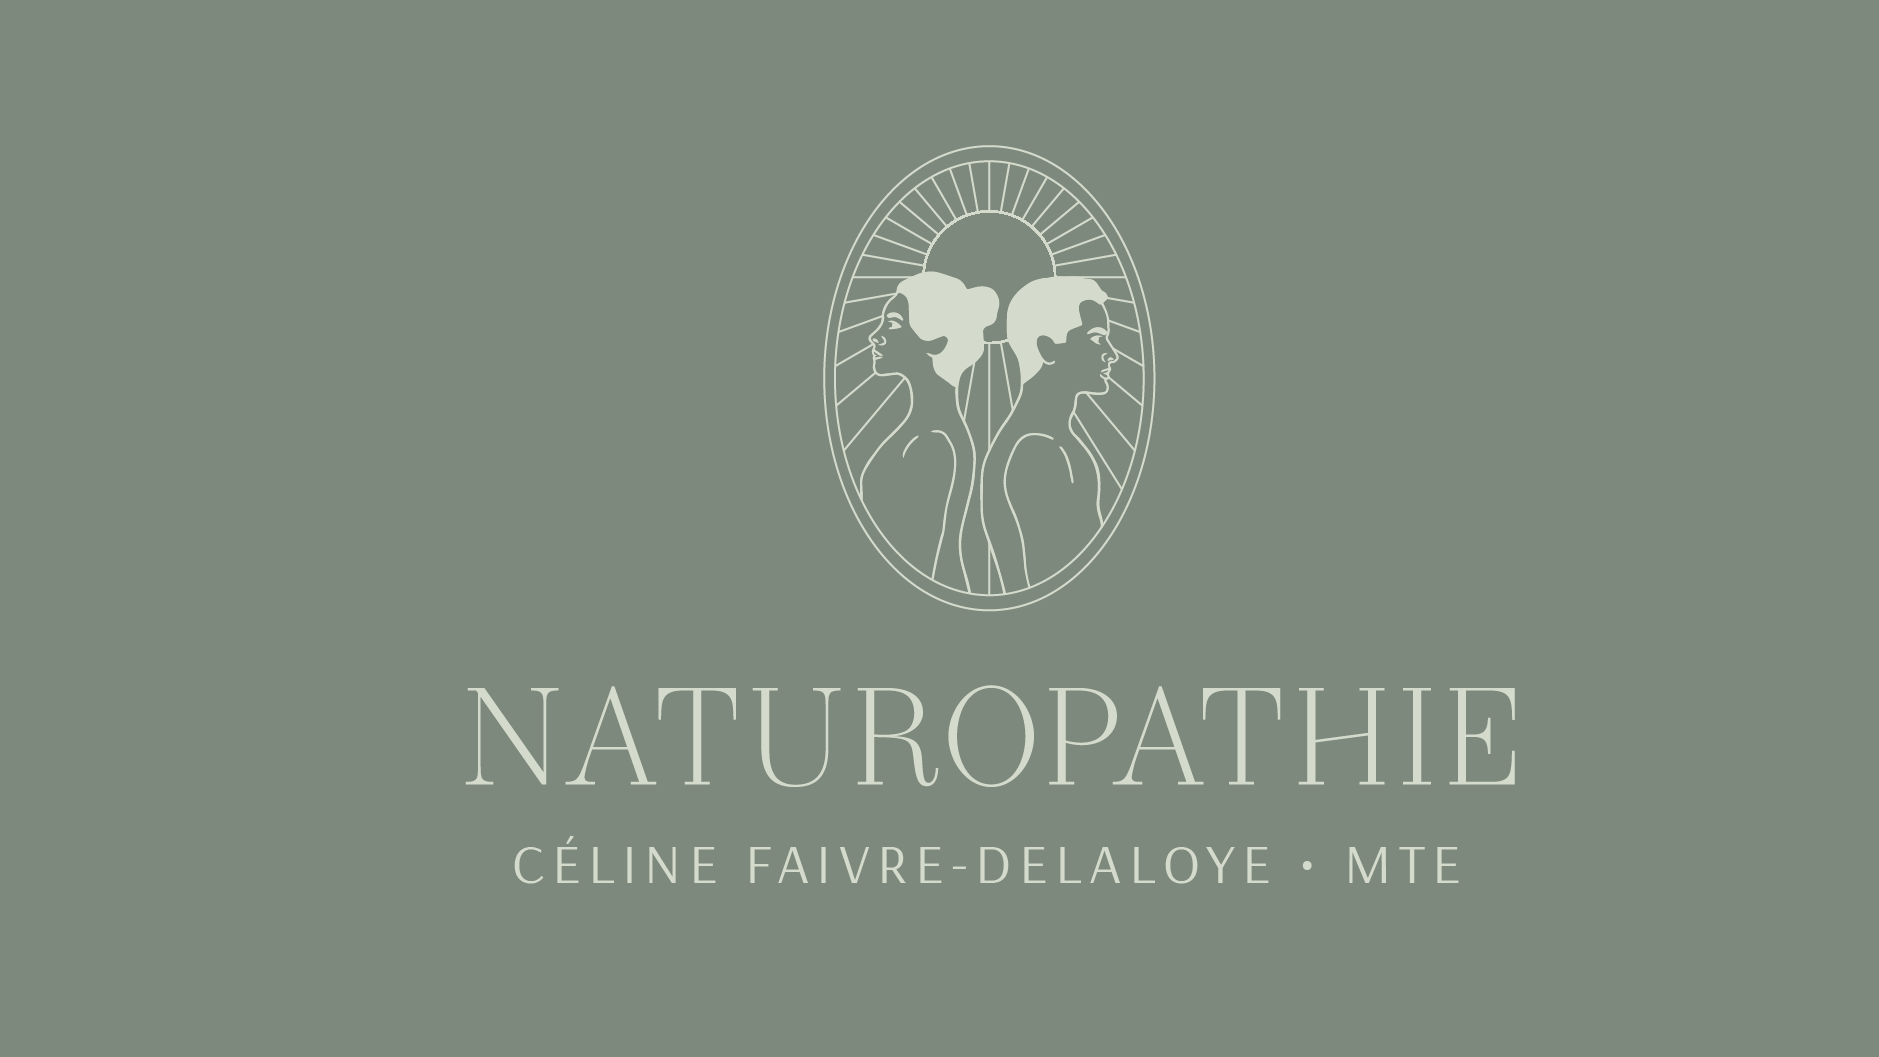 Céline Faivre-Delaloye